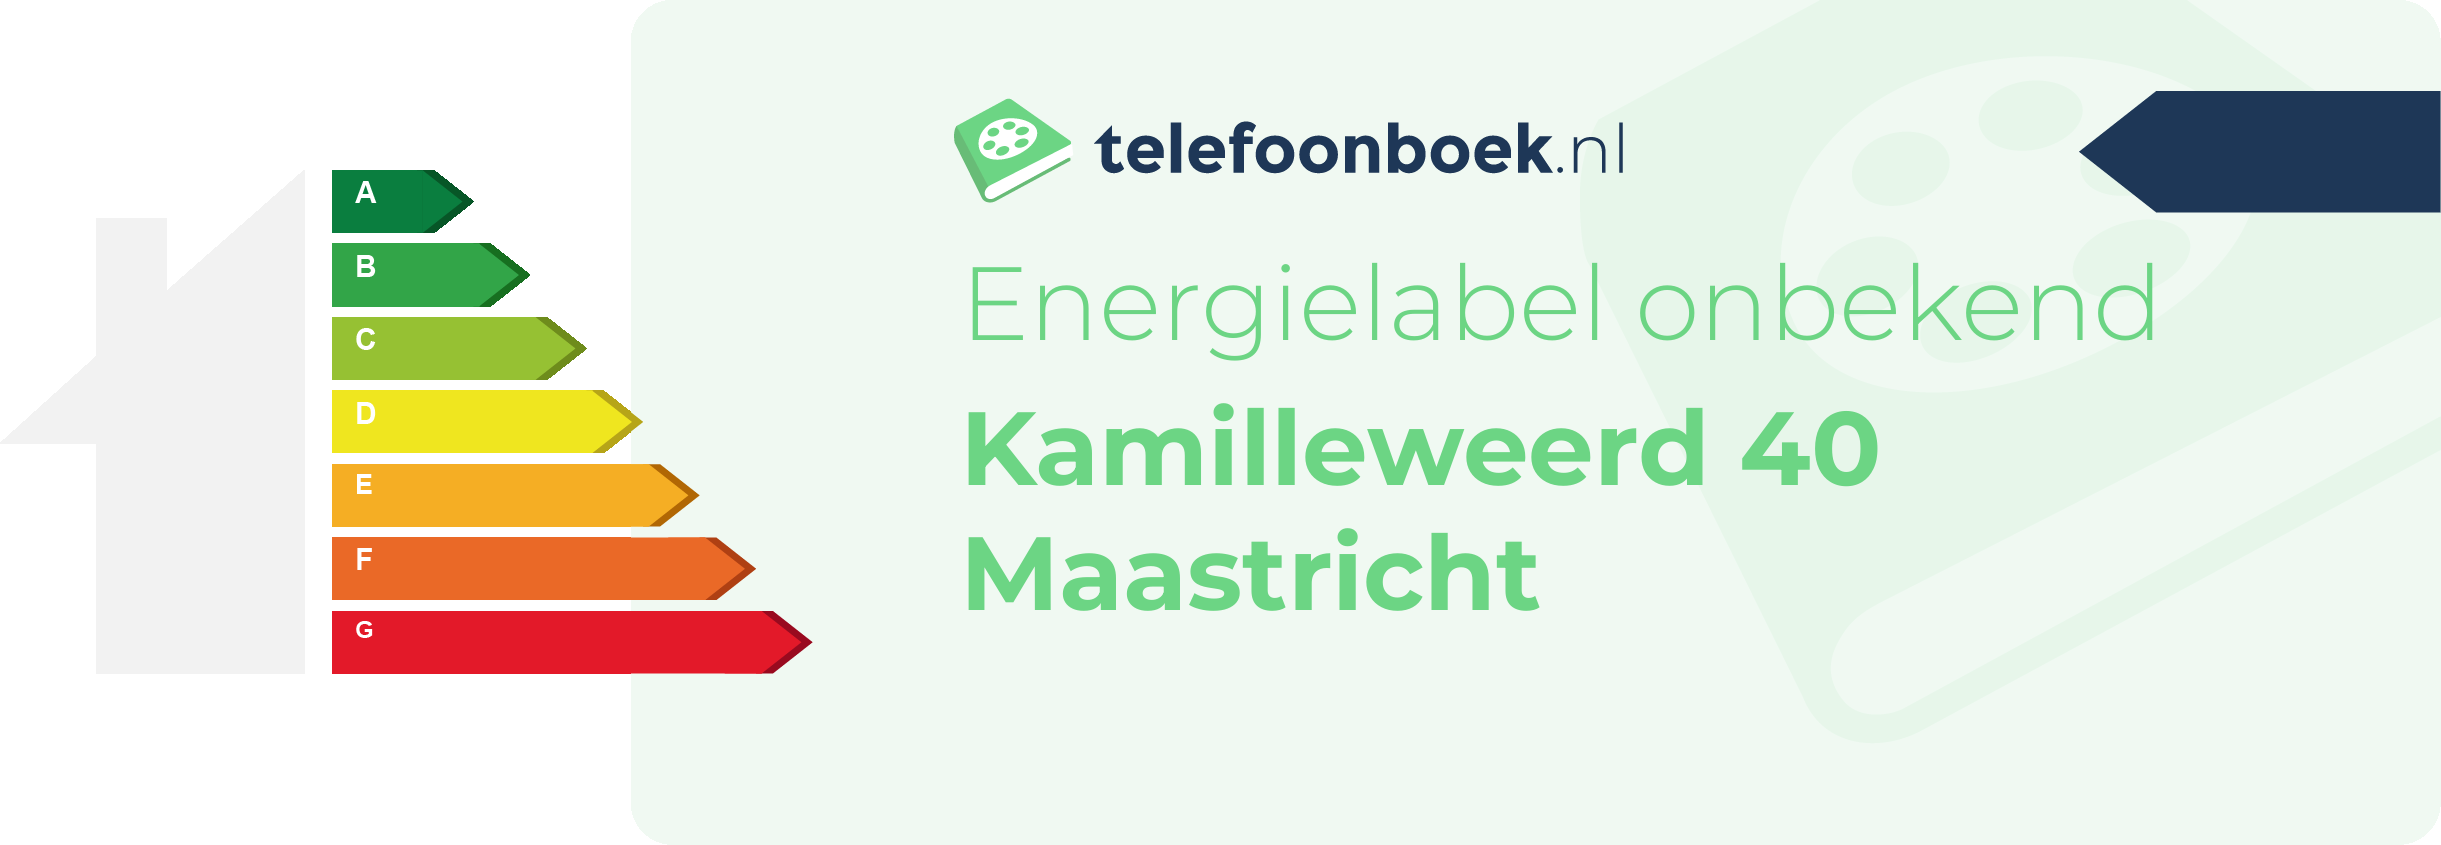 Energielabel Kamilleweerd 40 Maastricht